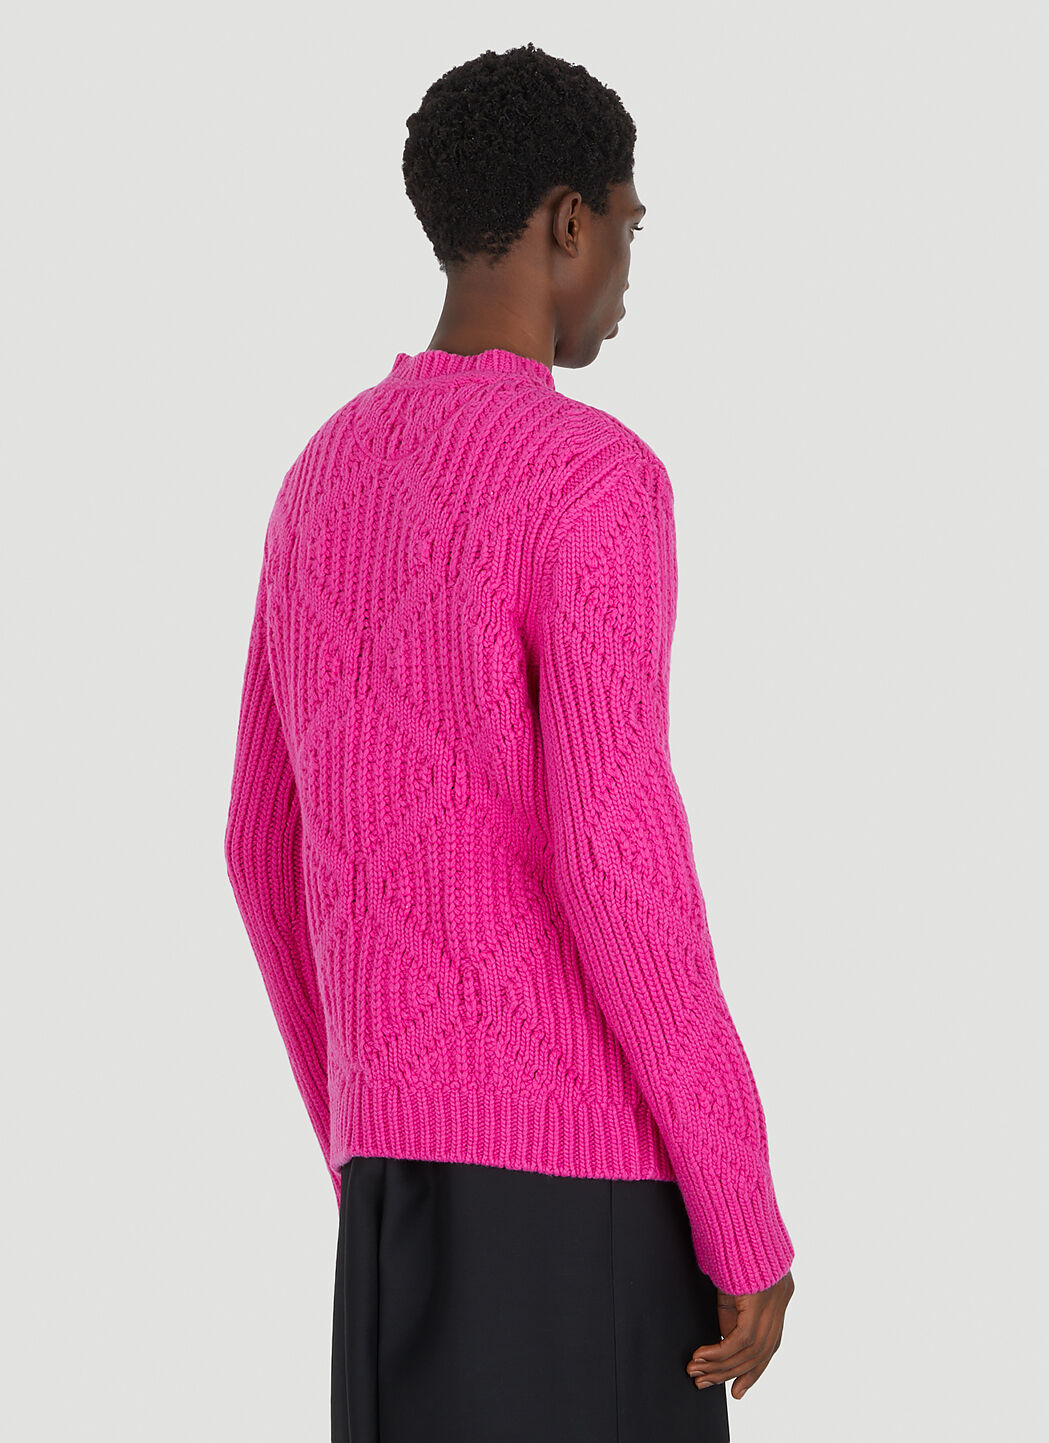 Geometric Motif Sweater